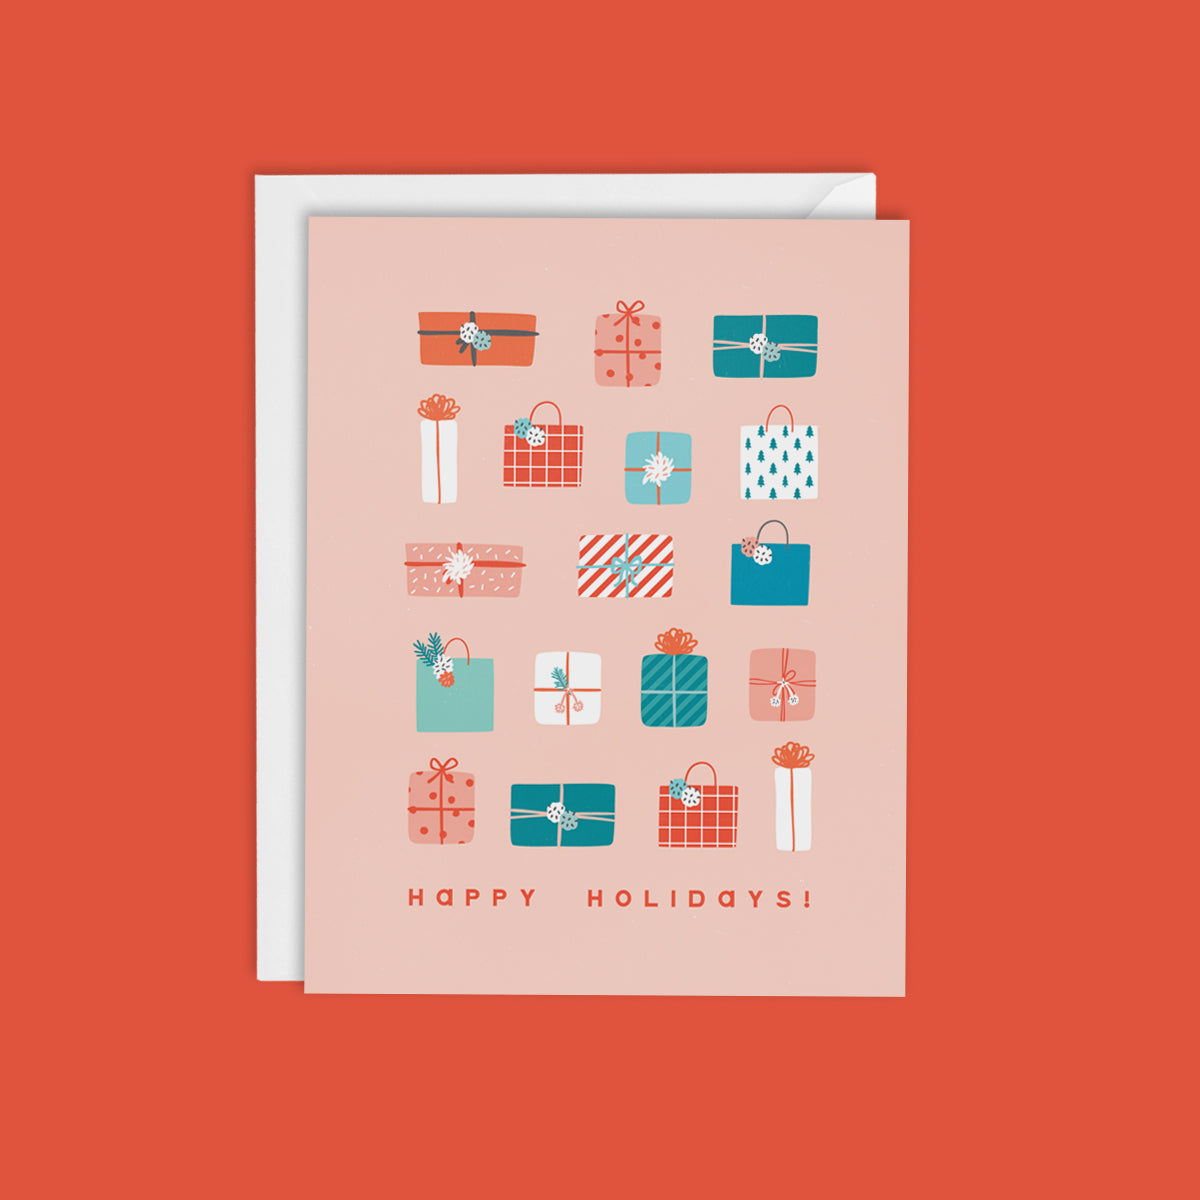 HAPPY HOLIDAYS! - HOLIDAY GIFTS CARD